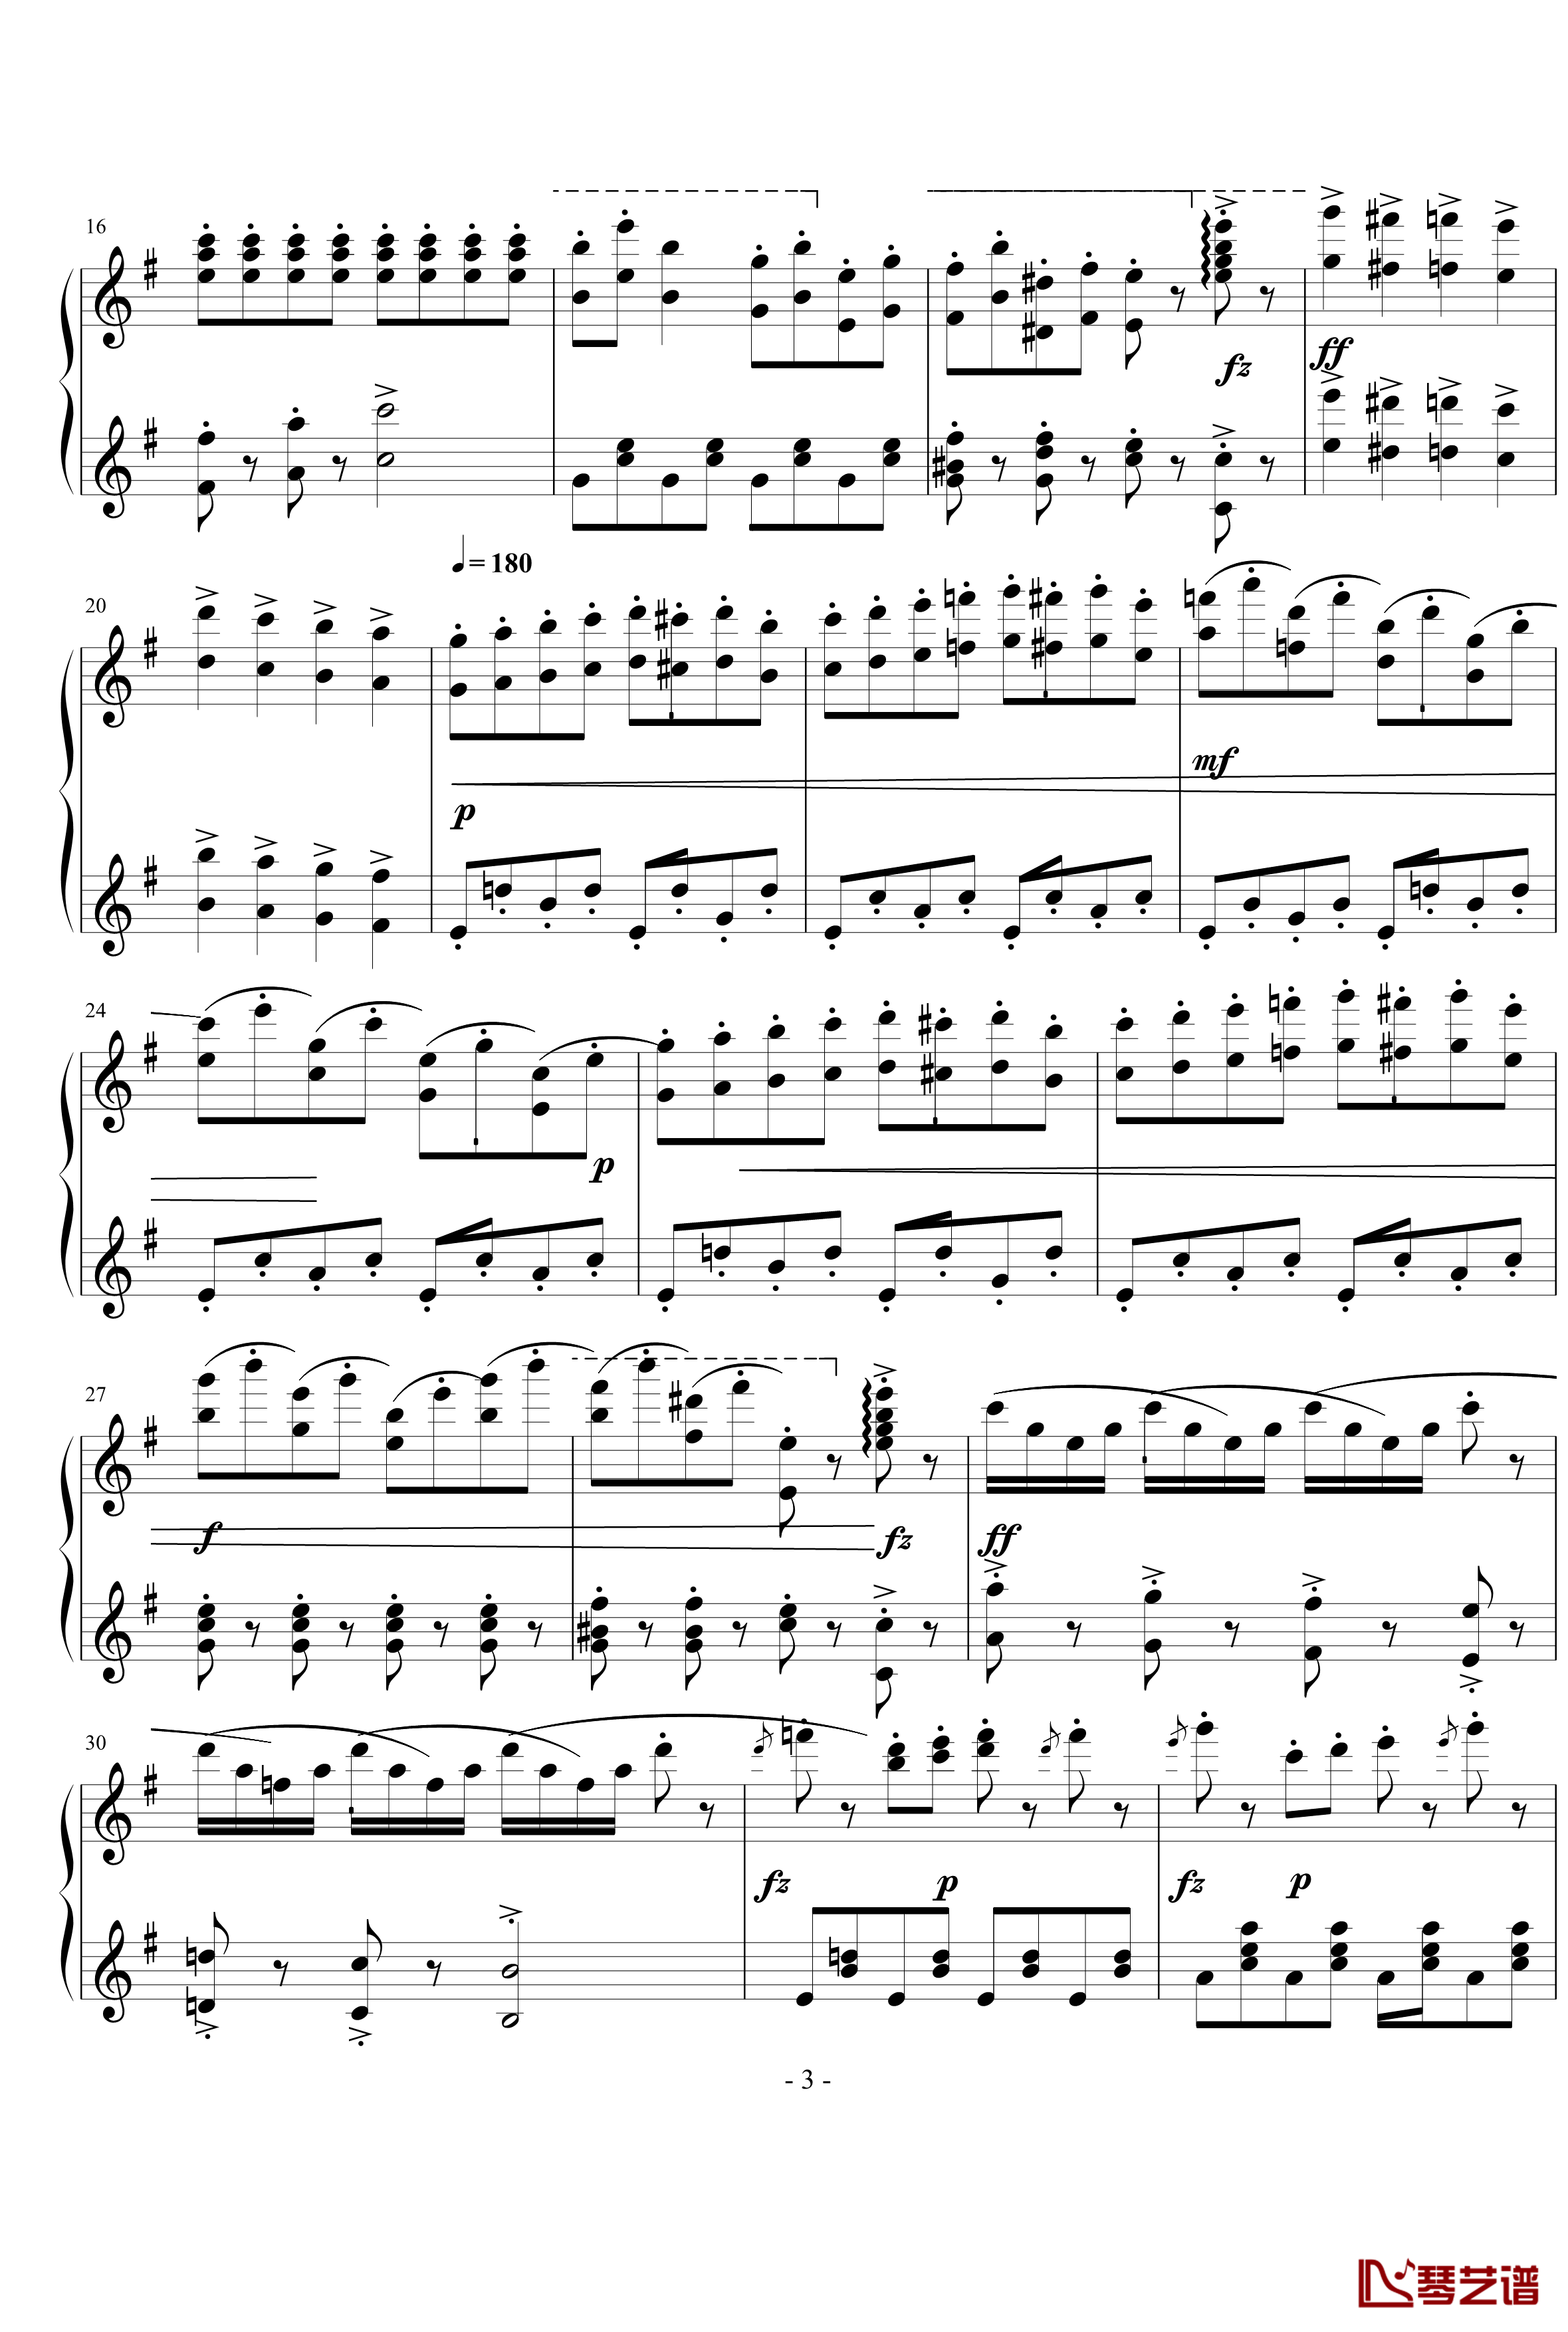 Grand Fantasia de Virtuosity钢琴谱-strikelzx3